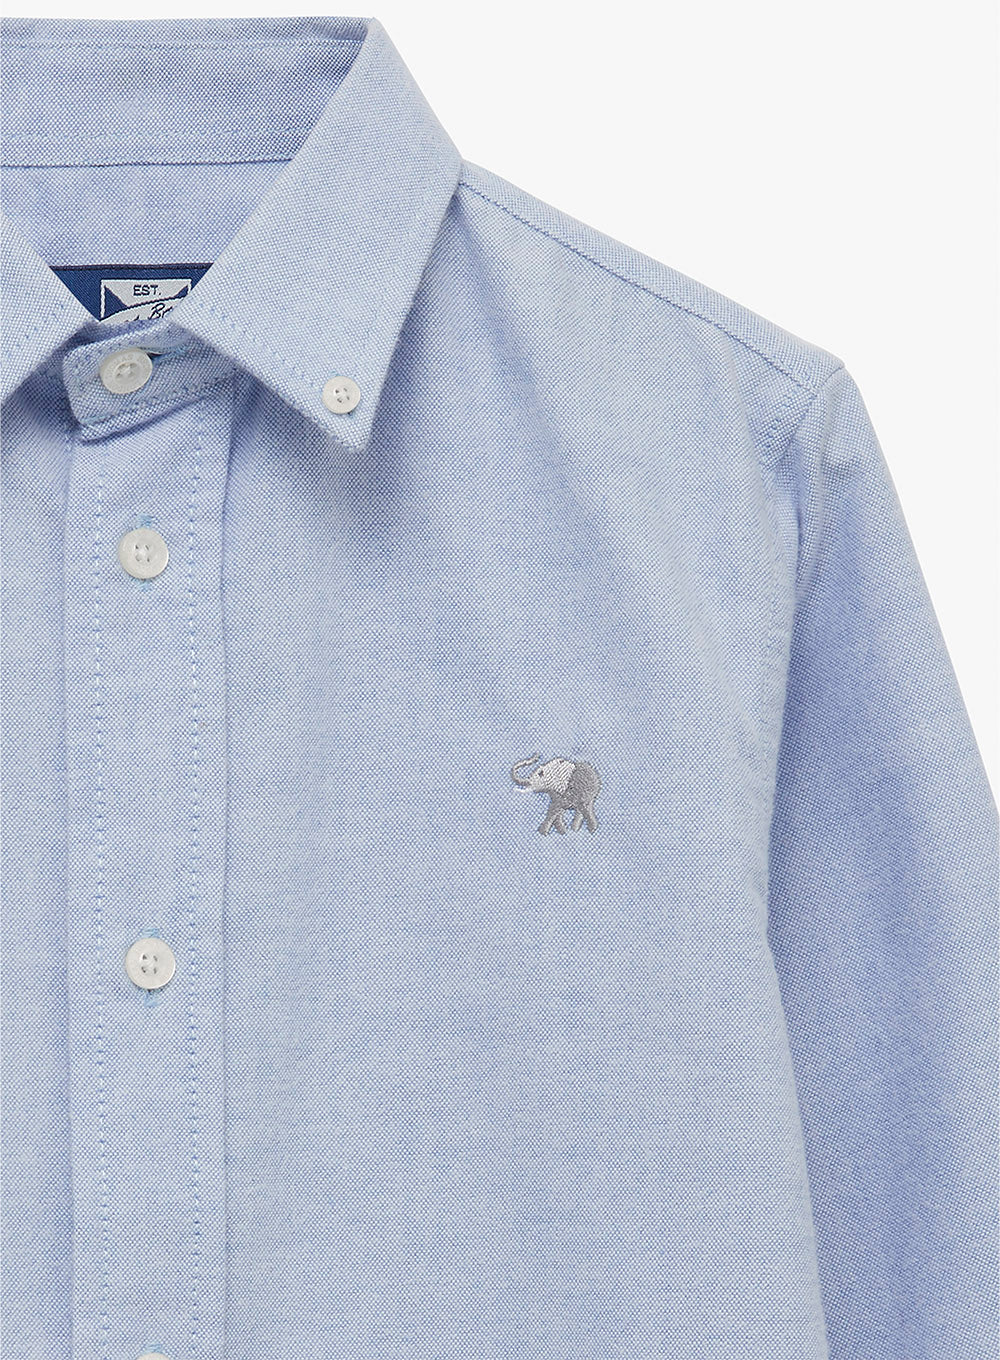 Thomas Shirt in Oxford Blue